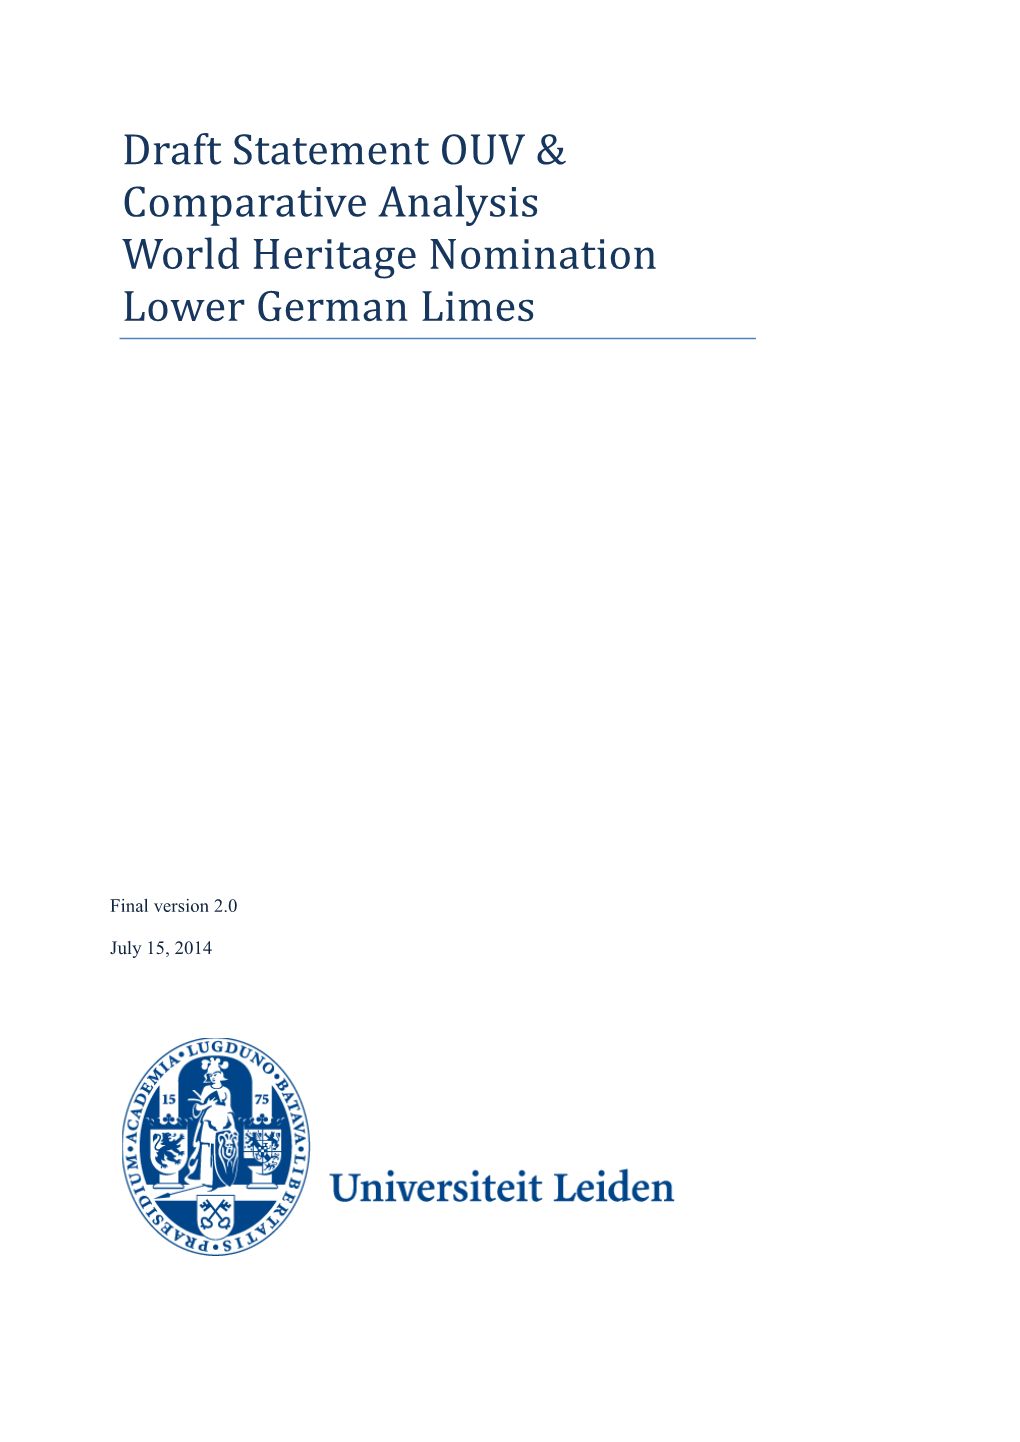 Draft Statement OUV & Comparative Analysis World Heritage